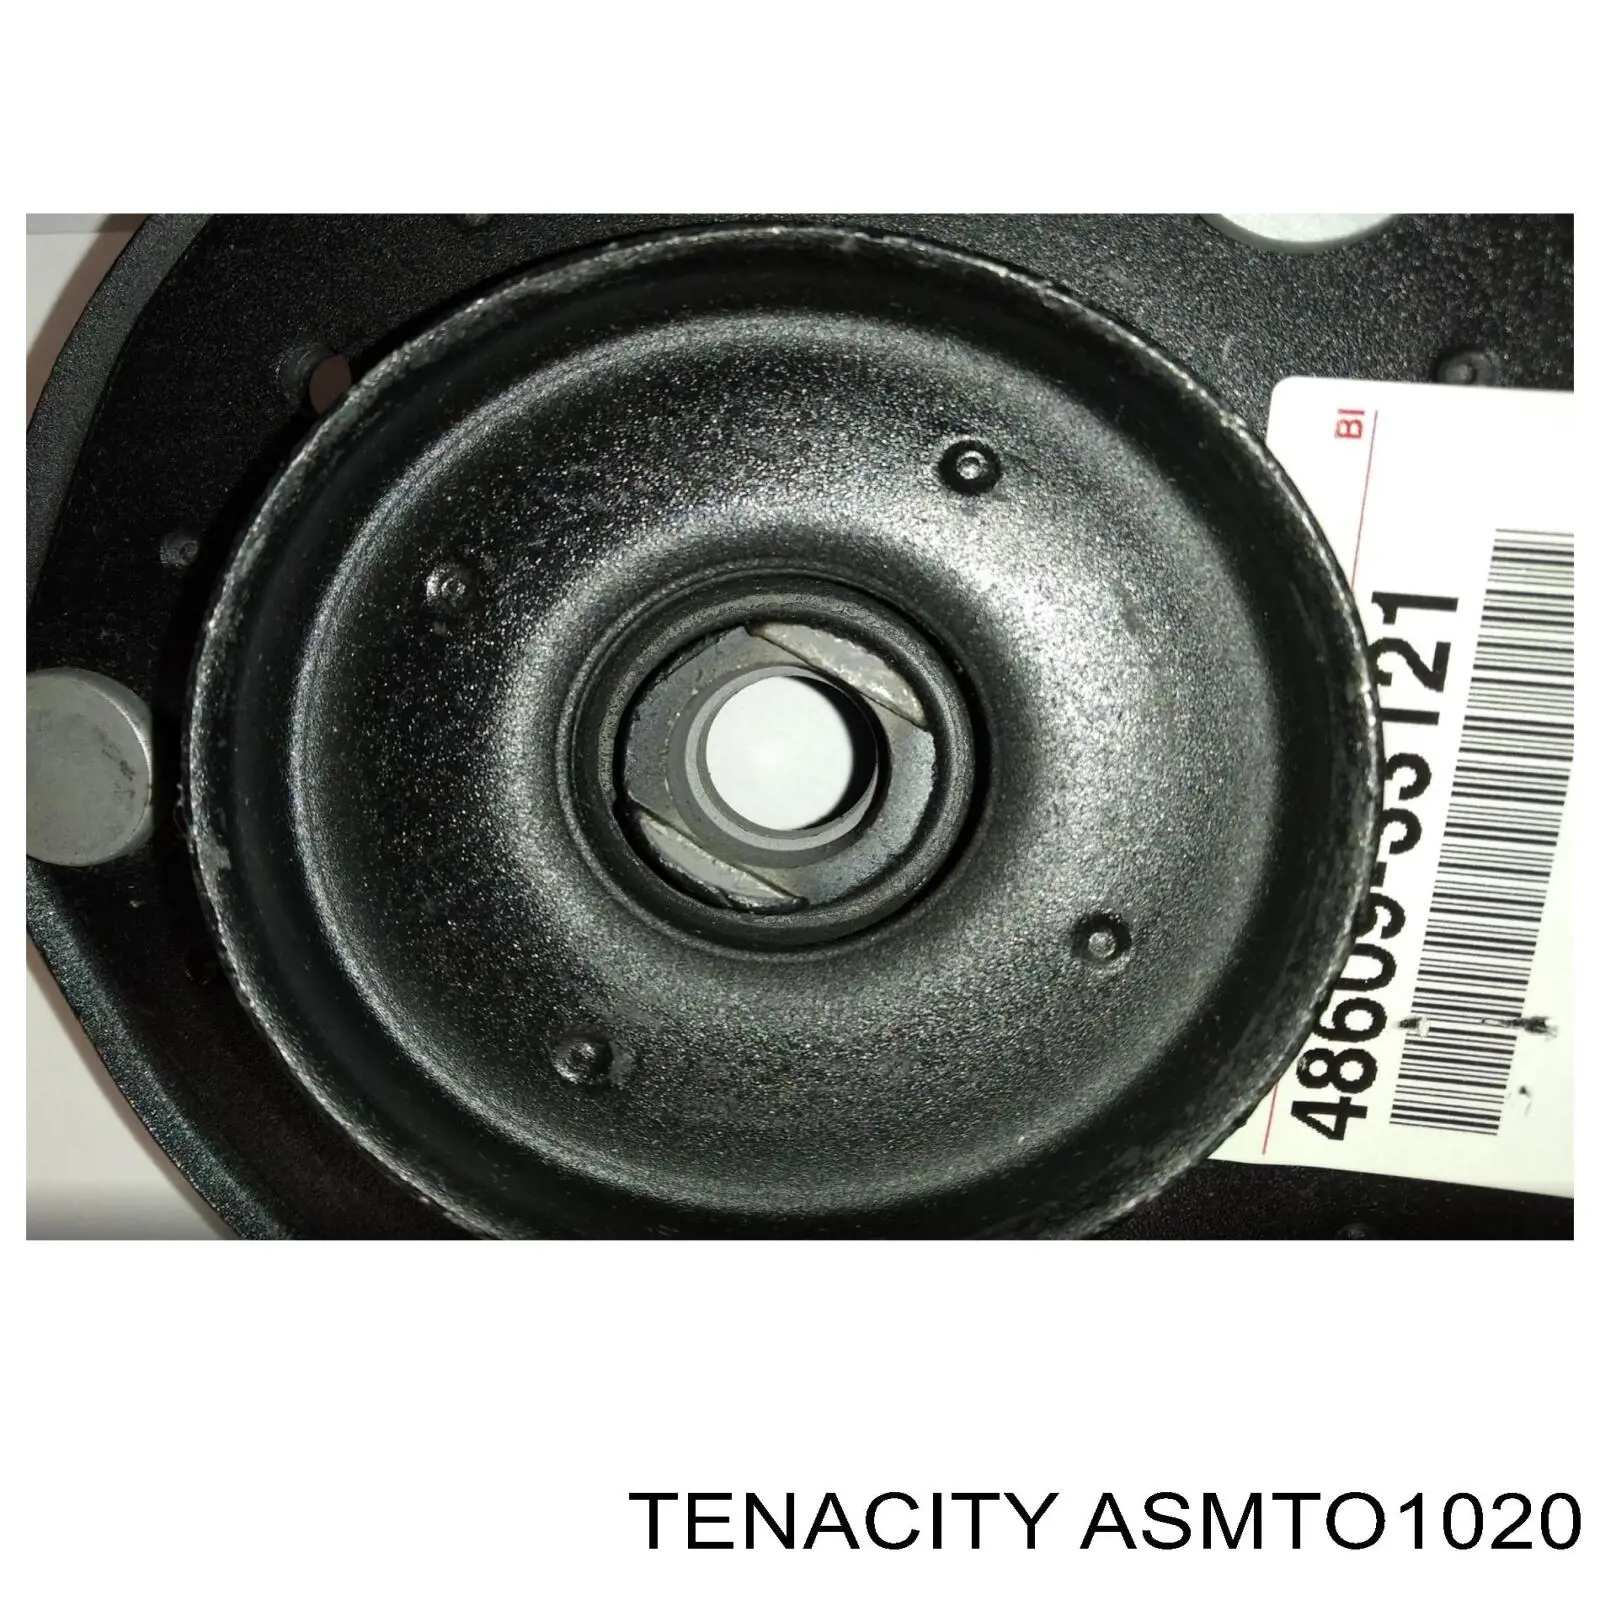 ASMTO1020 Tenacity suporte de amortecedor dianteiro esquerdo